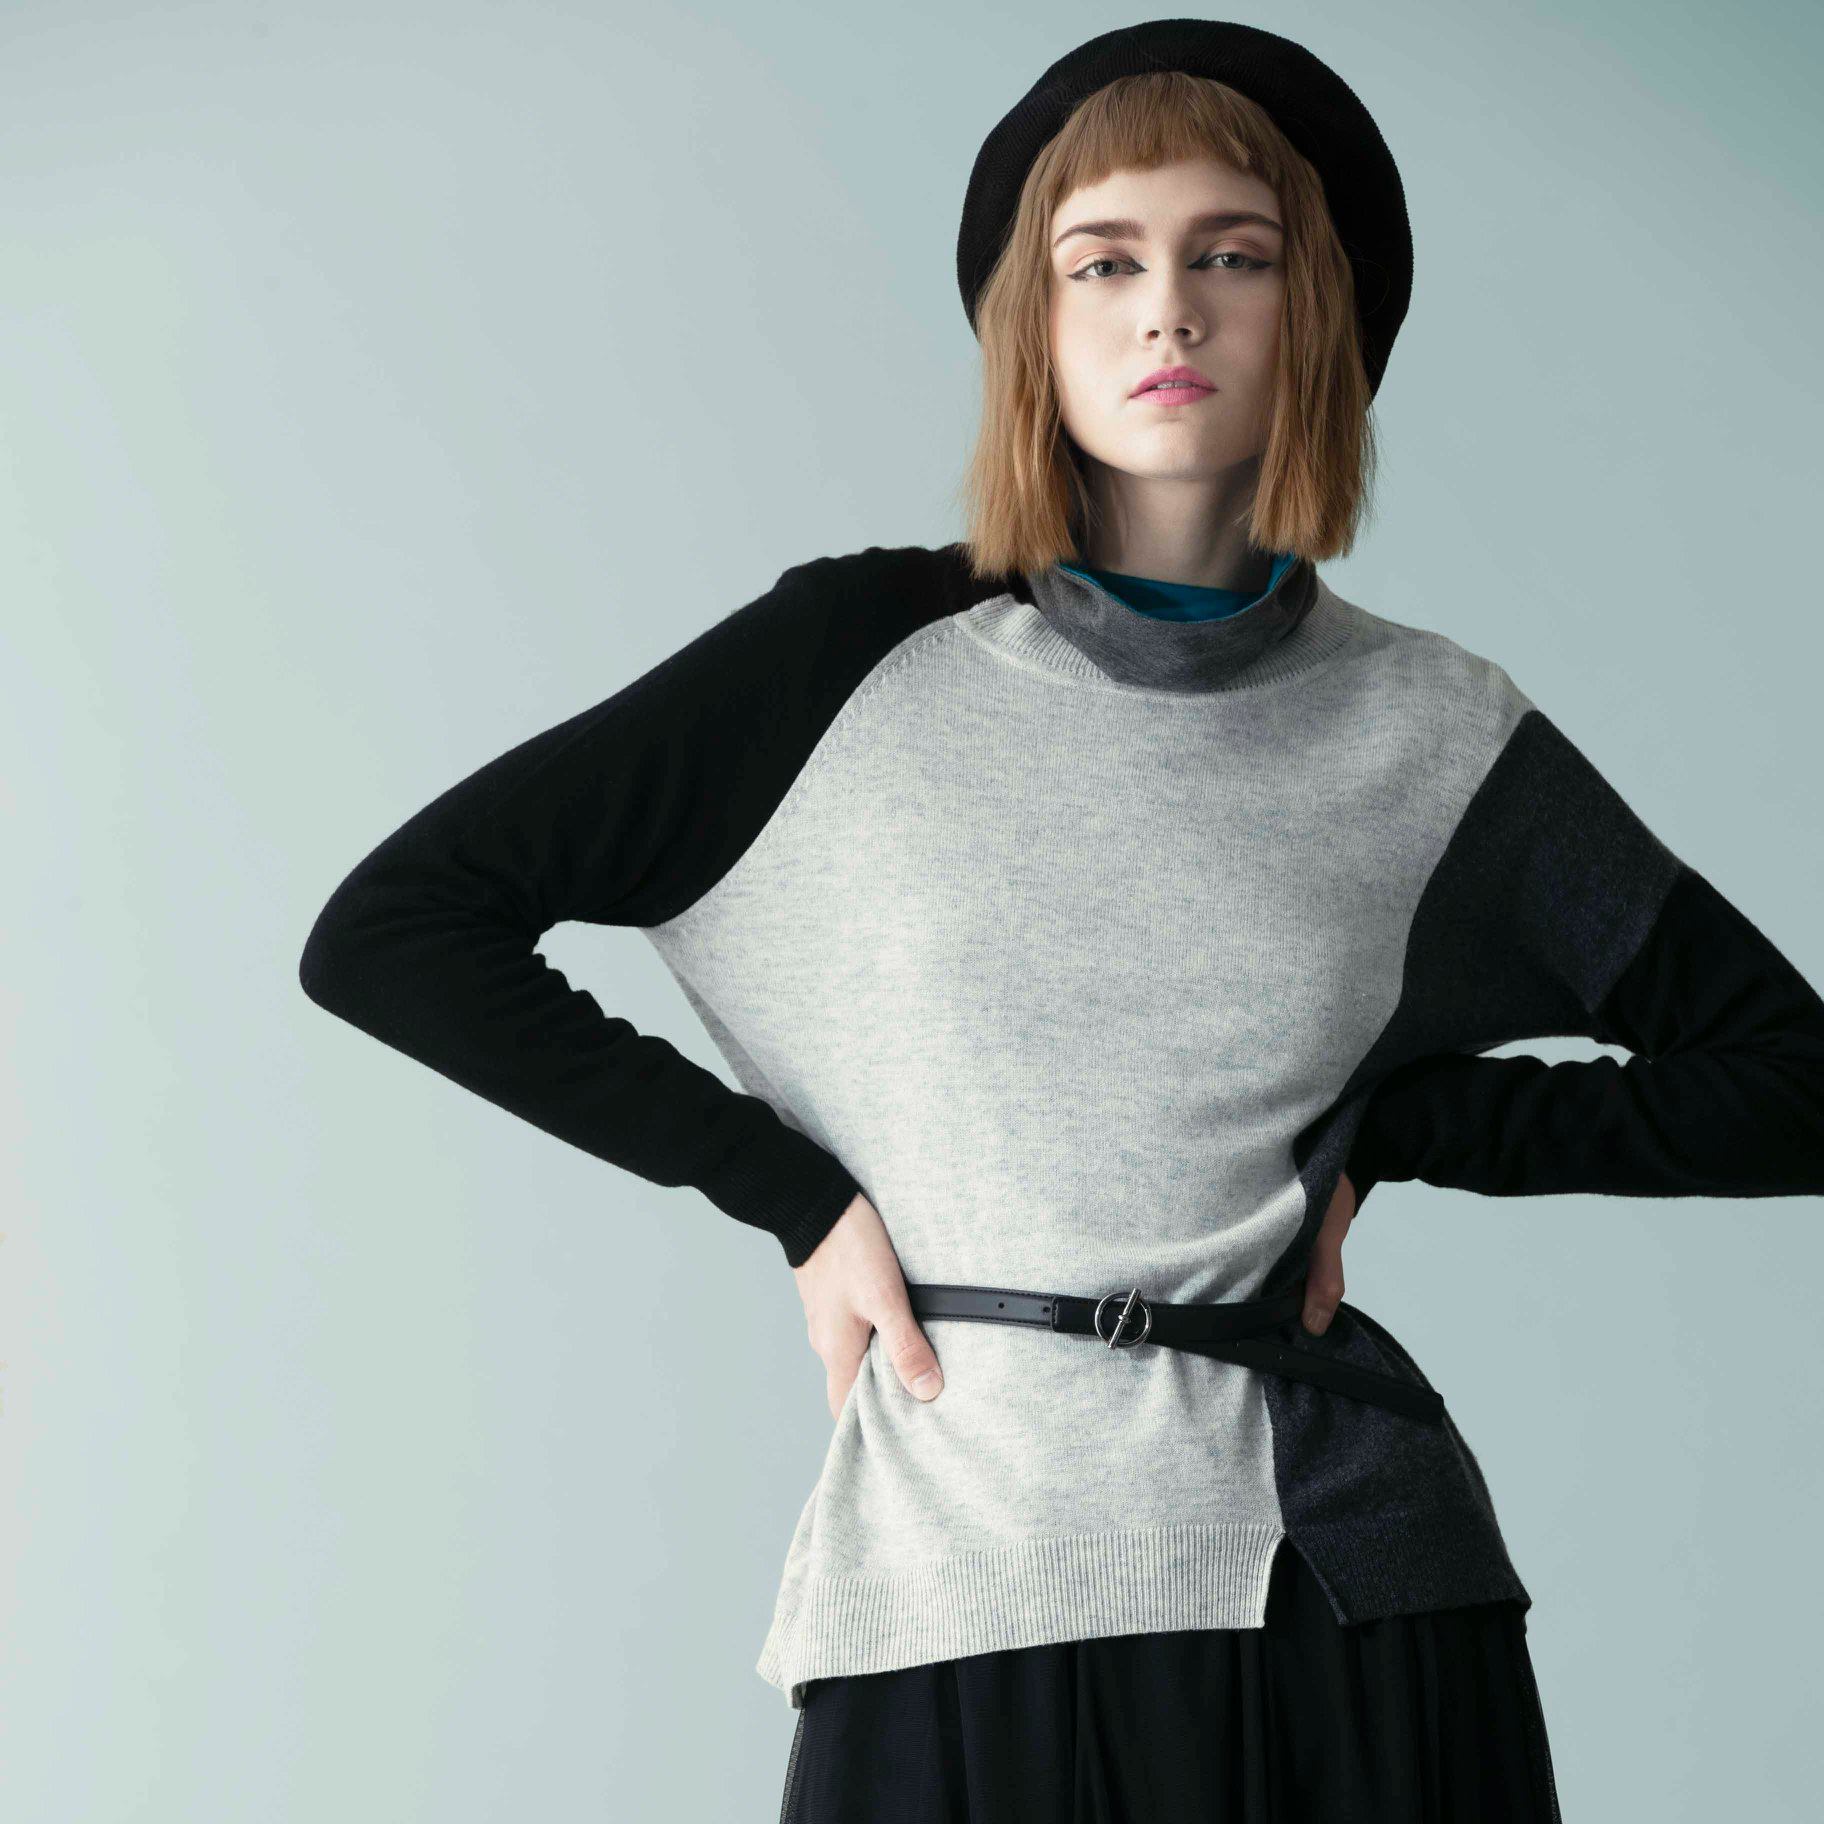 【Colourblock Wool Cashmere Top】拼色是前衛元素之一，Atsuro Tayama以不規則的黑、淺灰及灰色拼色設計，給保暖舒適的混羊絨針織上衣增添了個性，輕易穿出層次感豐富的時尚造型。 更多Atsuro Tayama單品在Sidefame網店發售﹕